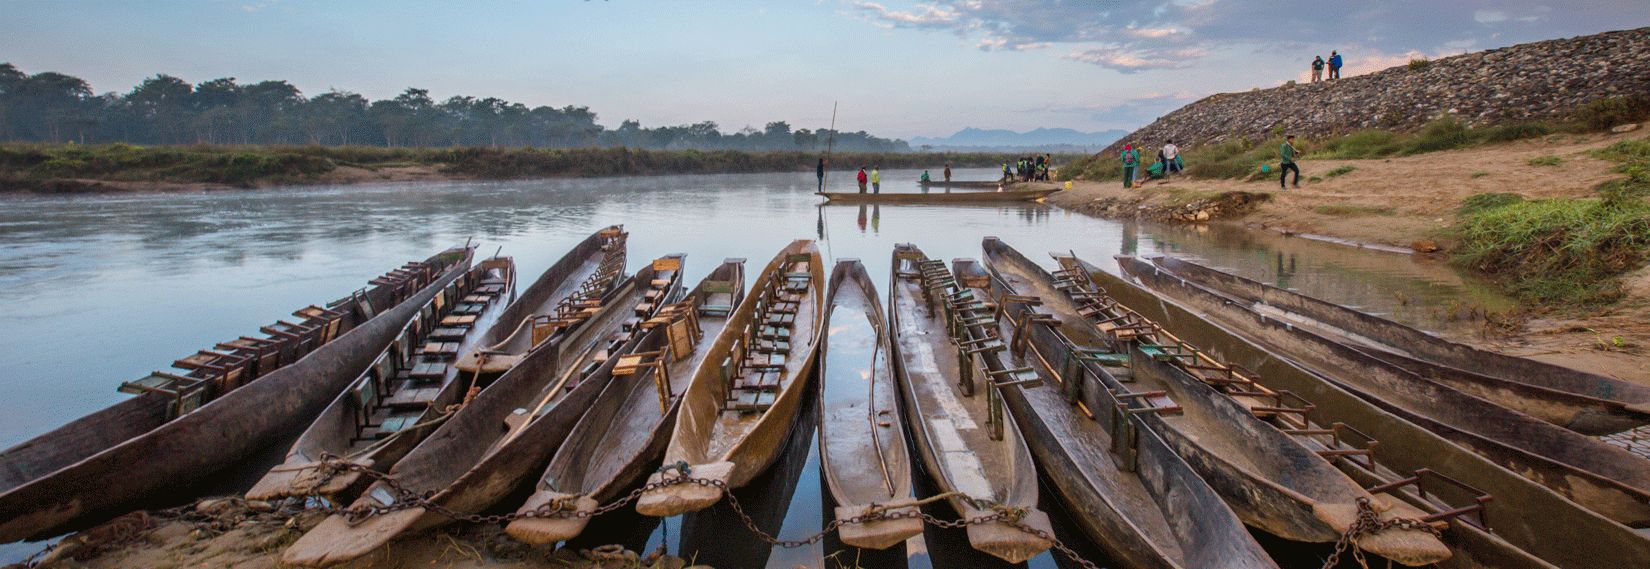 Canoeing on Rapti River in Chitwan